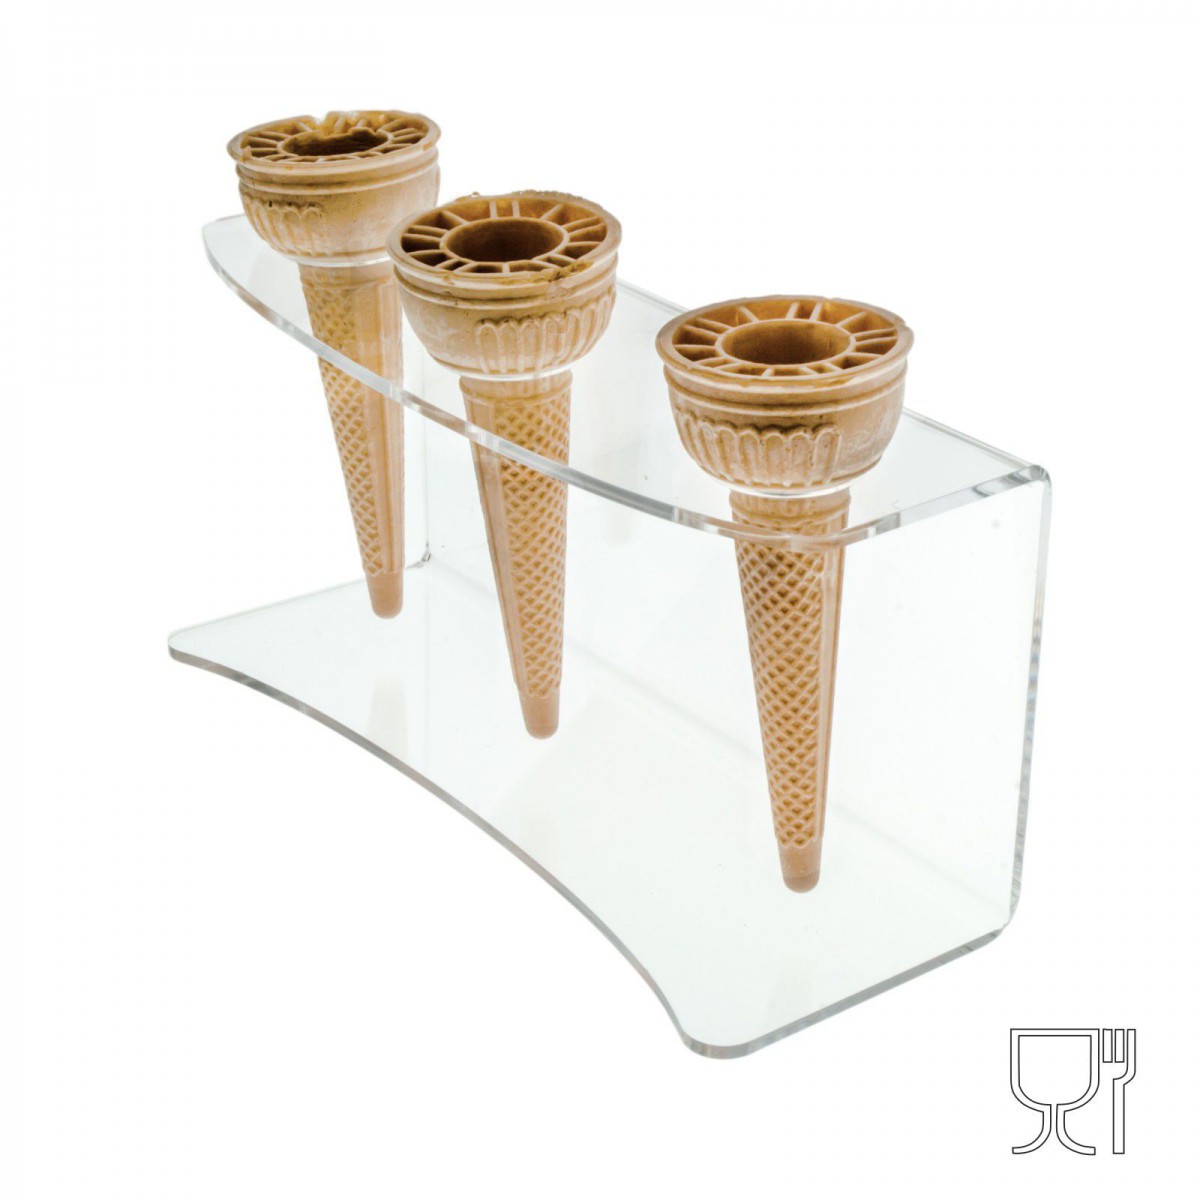 Clear Acrylic countertop ice-cream cone holder